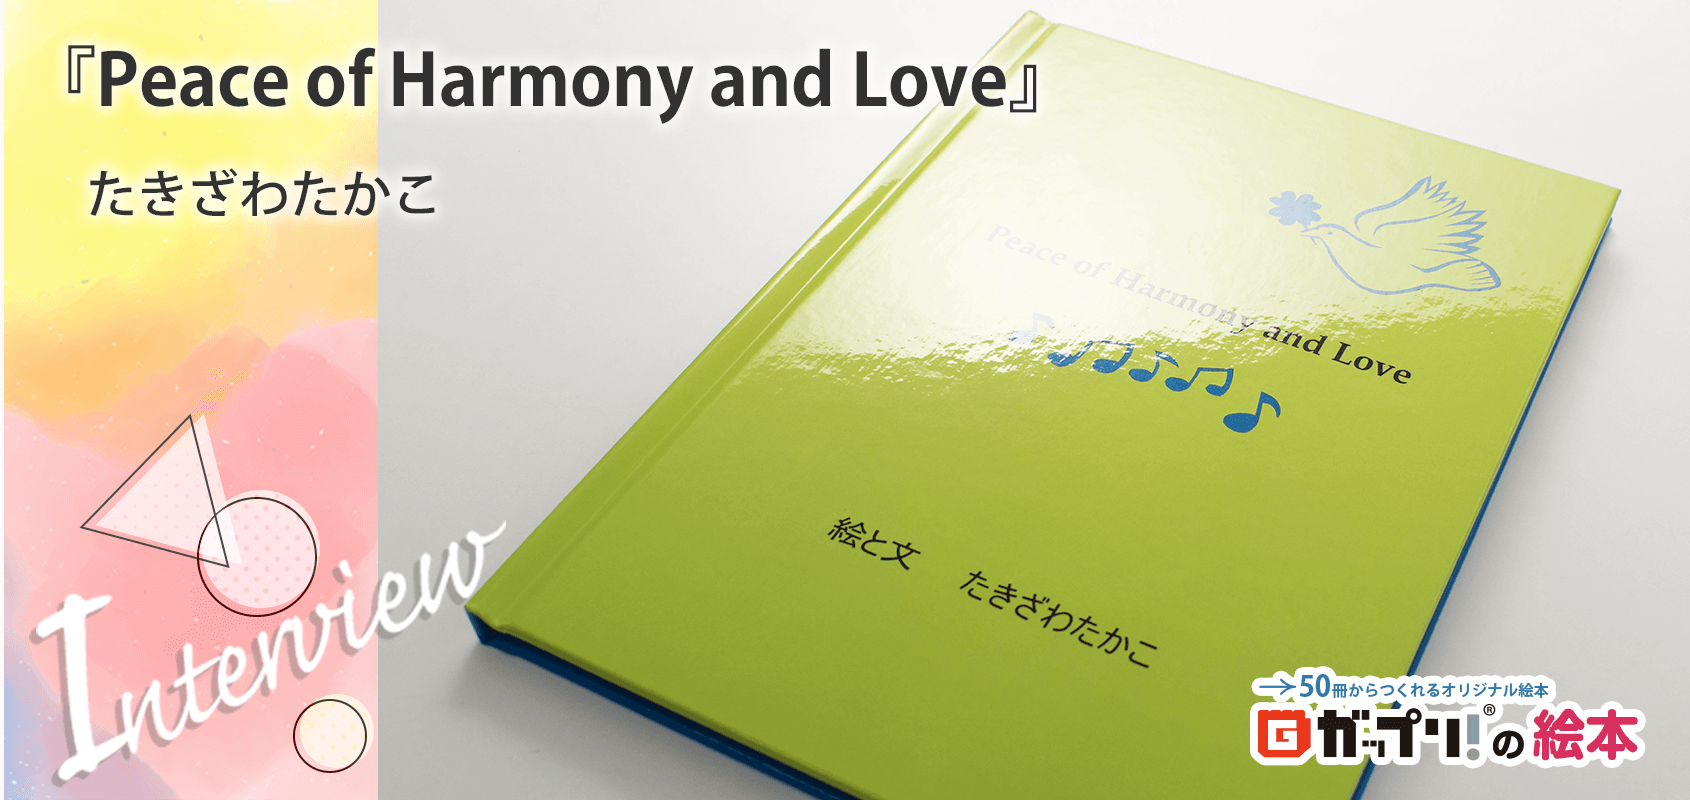 『Peace of Harmony and Love』たきざわたかこ